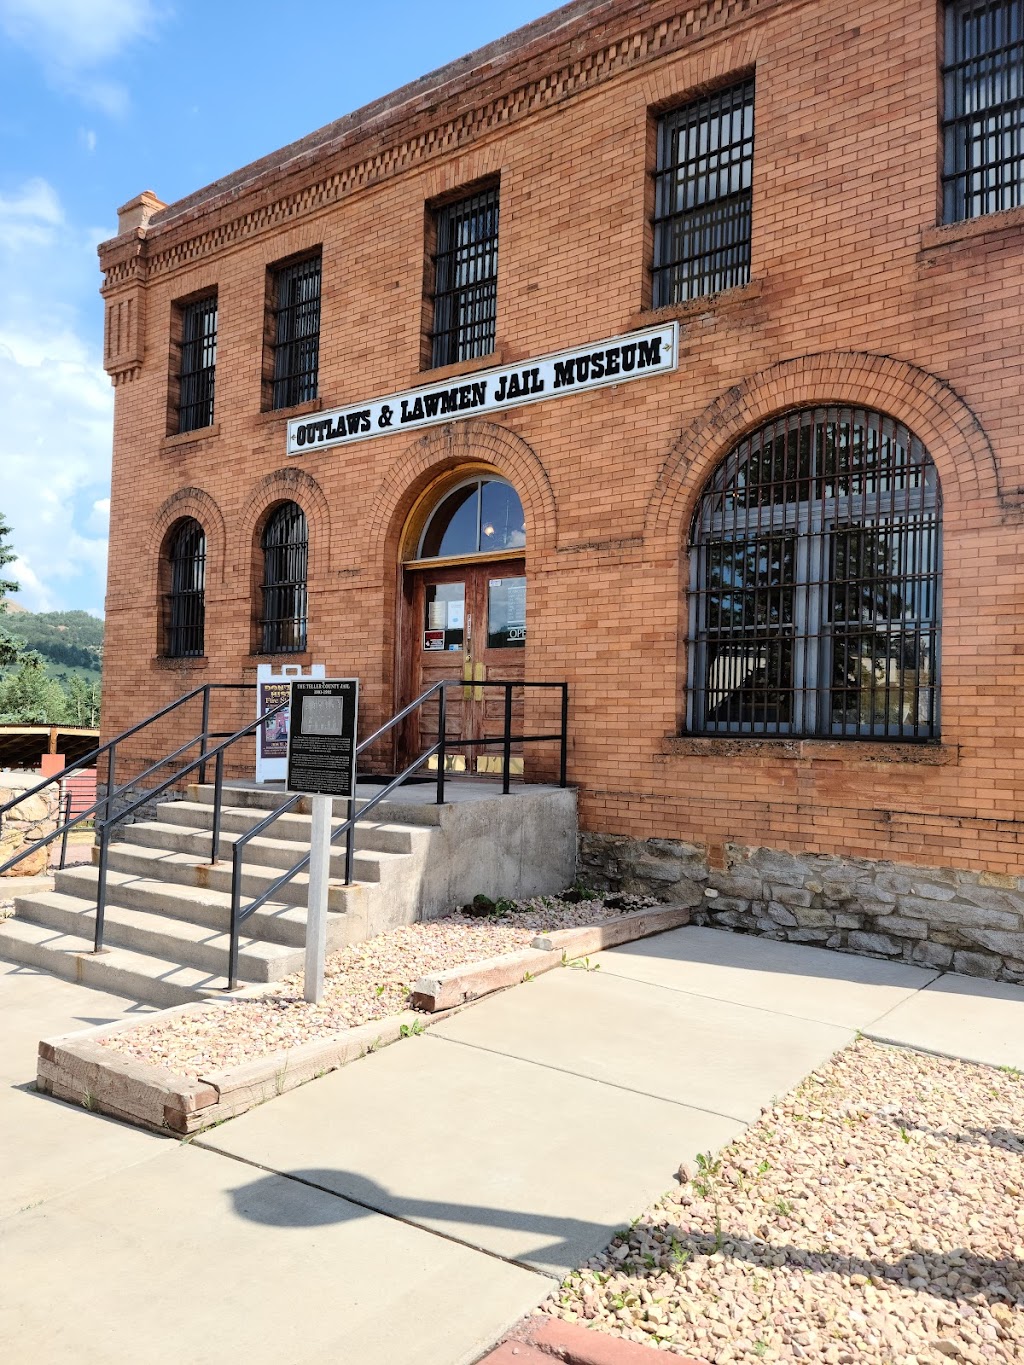 Outlaws & Law Men Jail Museum | 136 W Bennett Ave, Cripple Creek, CO 80813, USA | Phone: (719) 689-6556